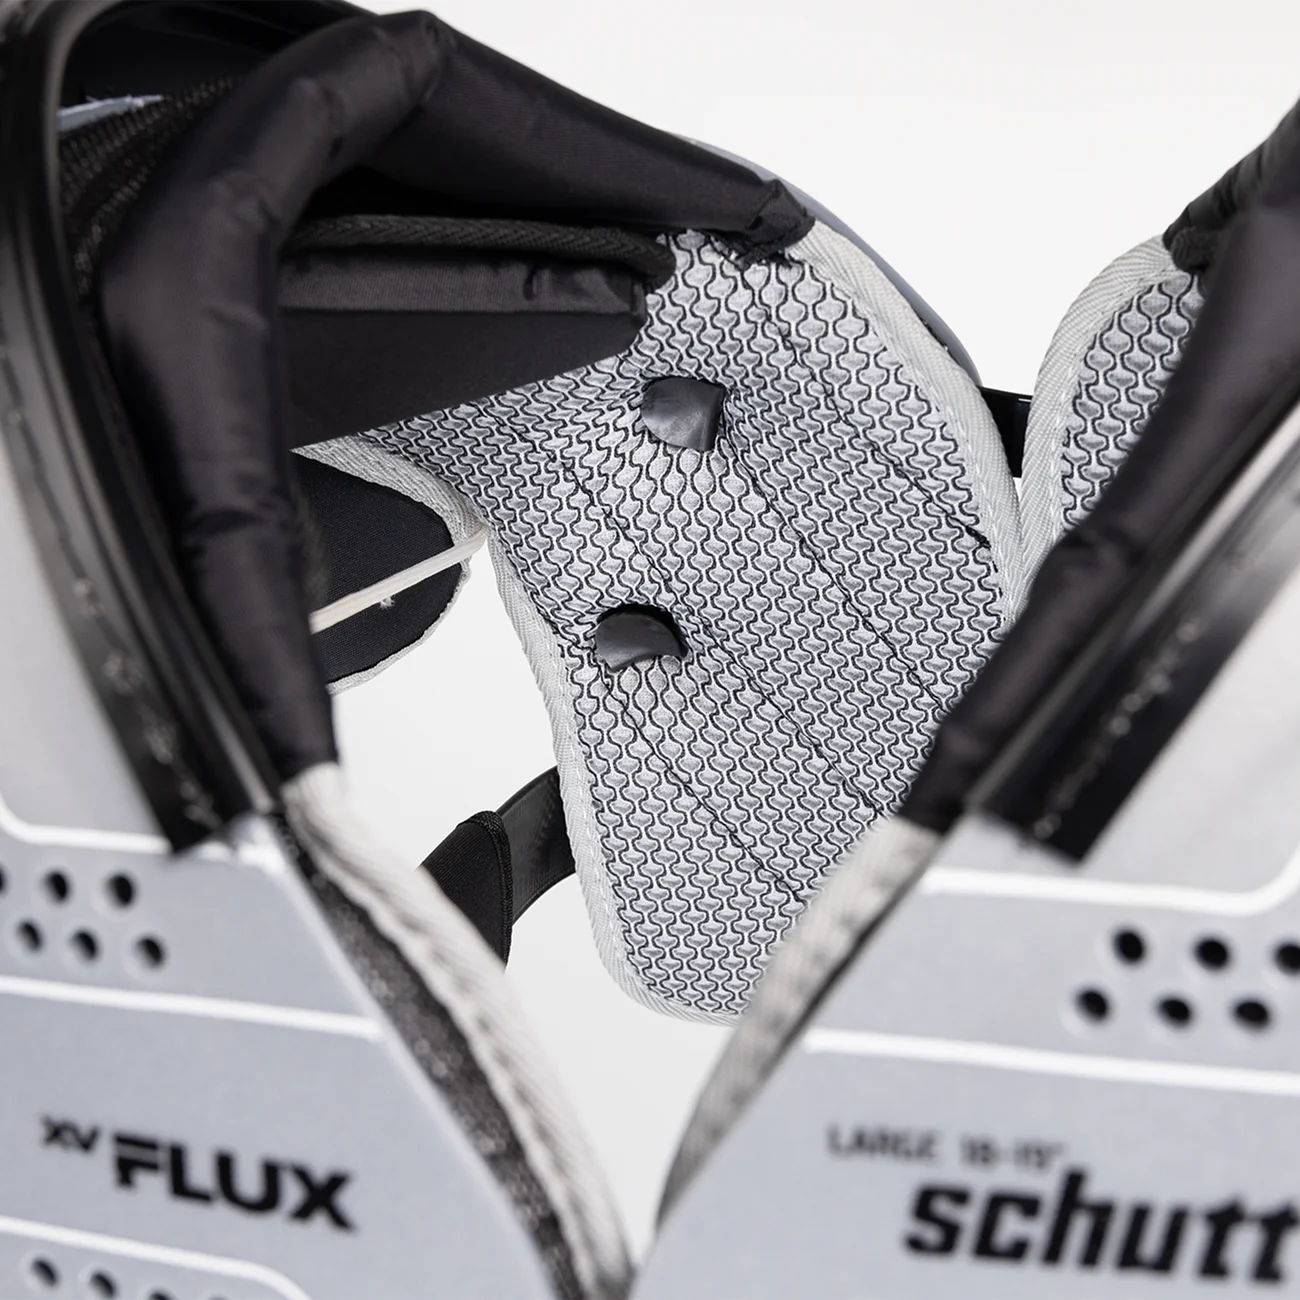 Schutt XV FLUX - Line